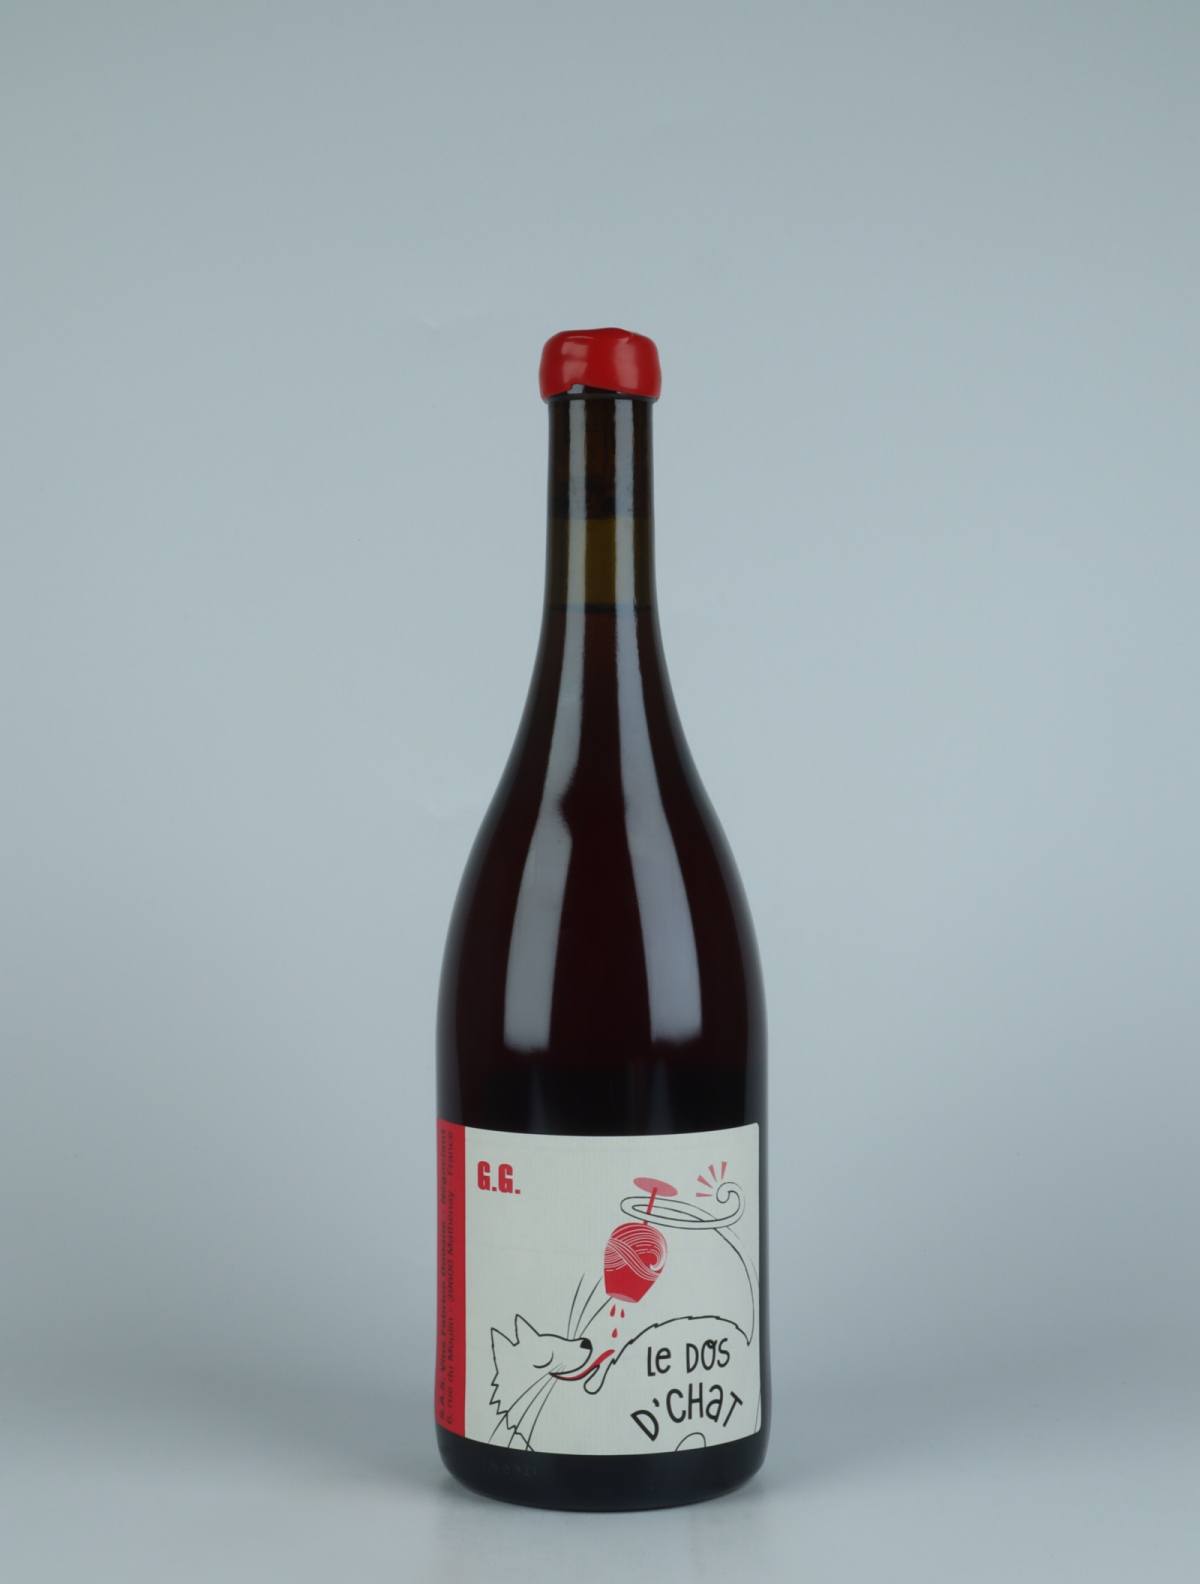 A bottle 2021 G.G. Rouge Red wine from Fabrice Dodane, Jura in France